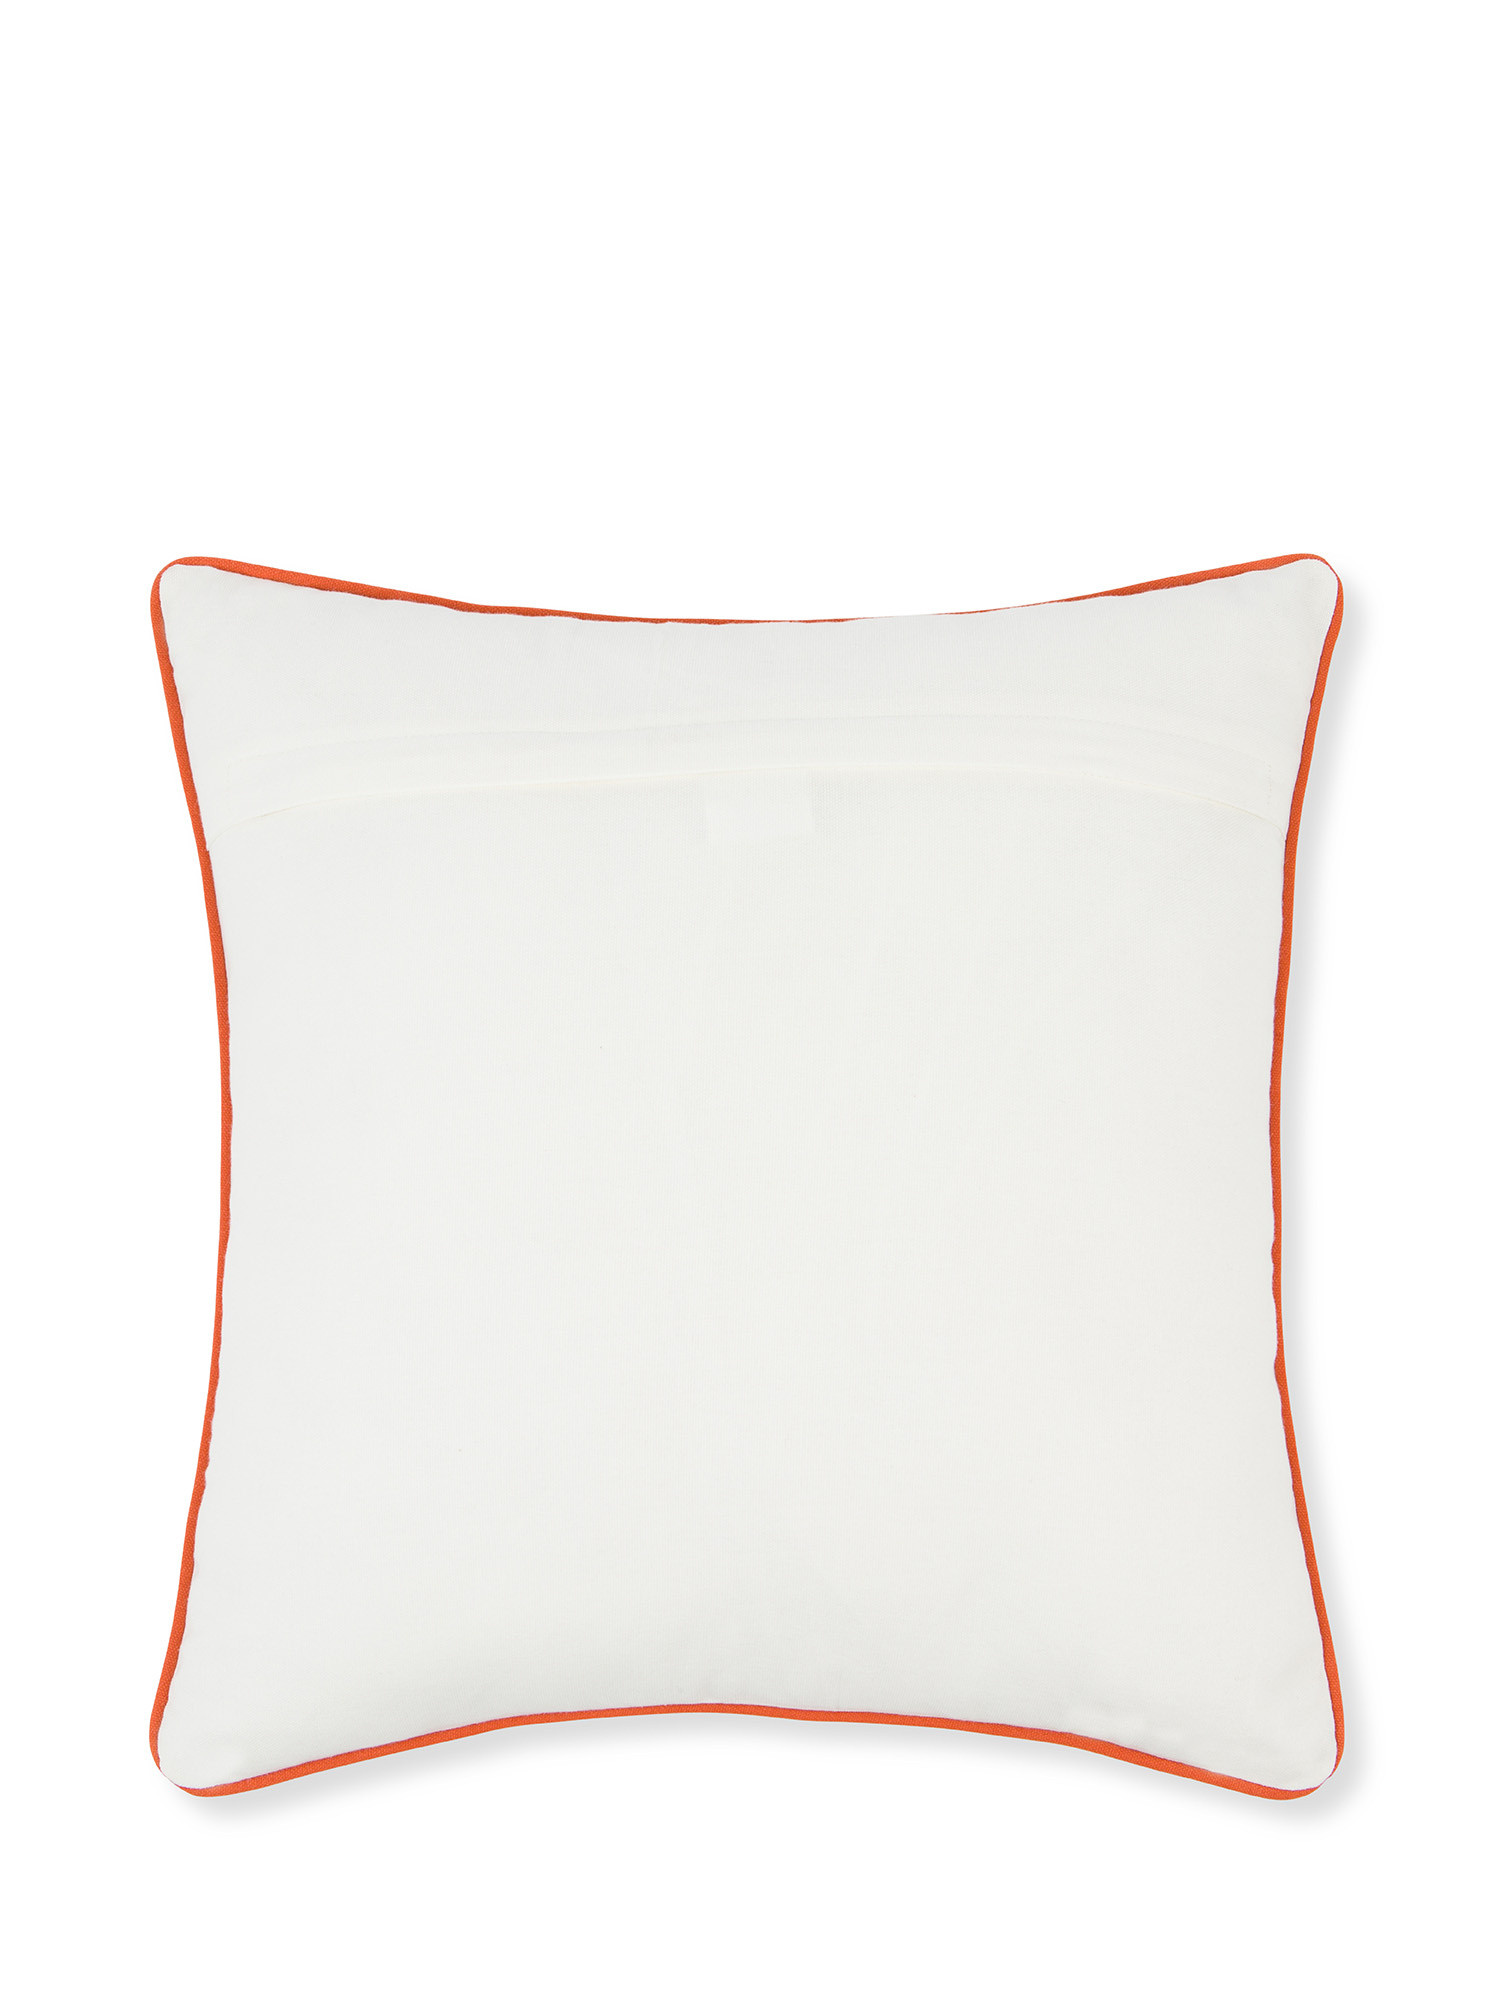 Cuscino ricamato con motivo damasco 45x45cm, Bianco, large image number 1